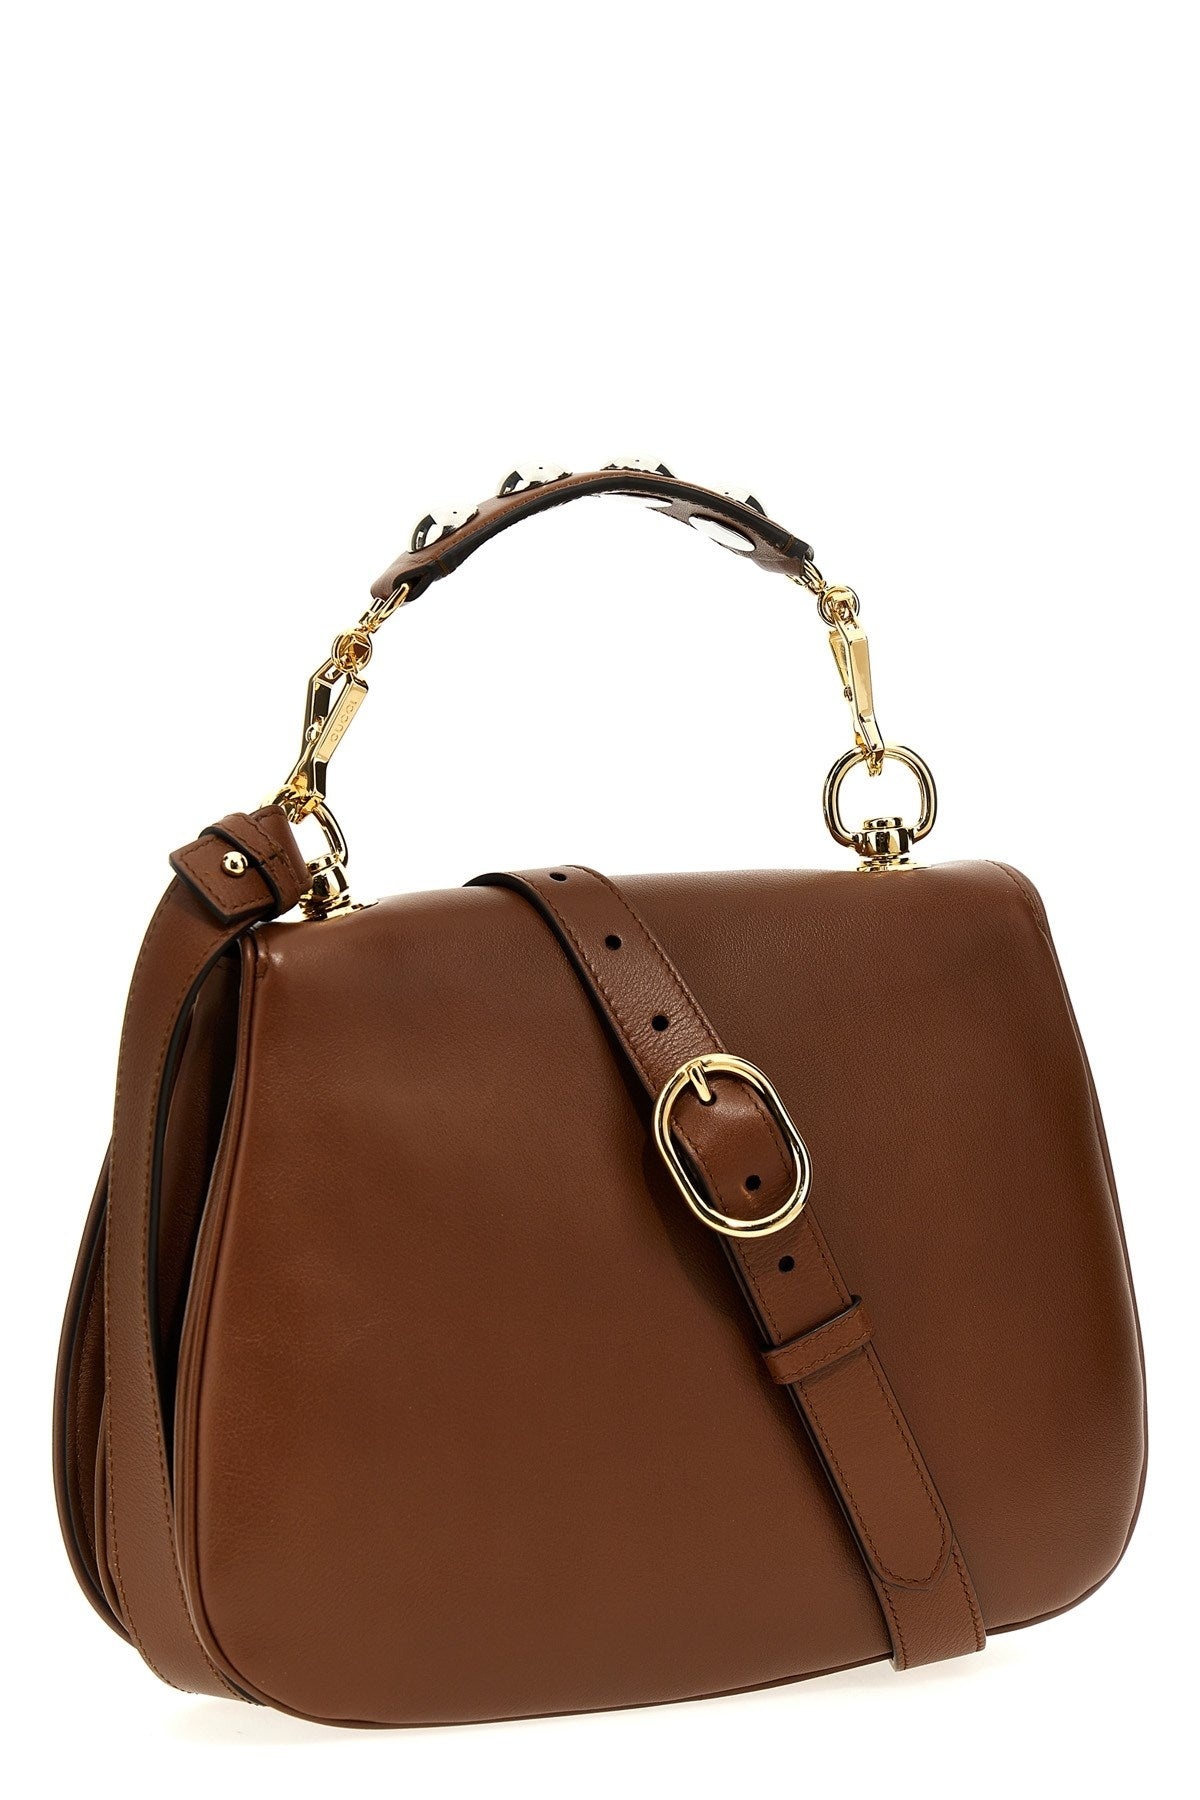 Gucci Women 'Blondie' Small Handbag - 2